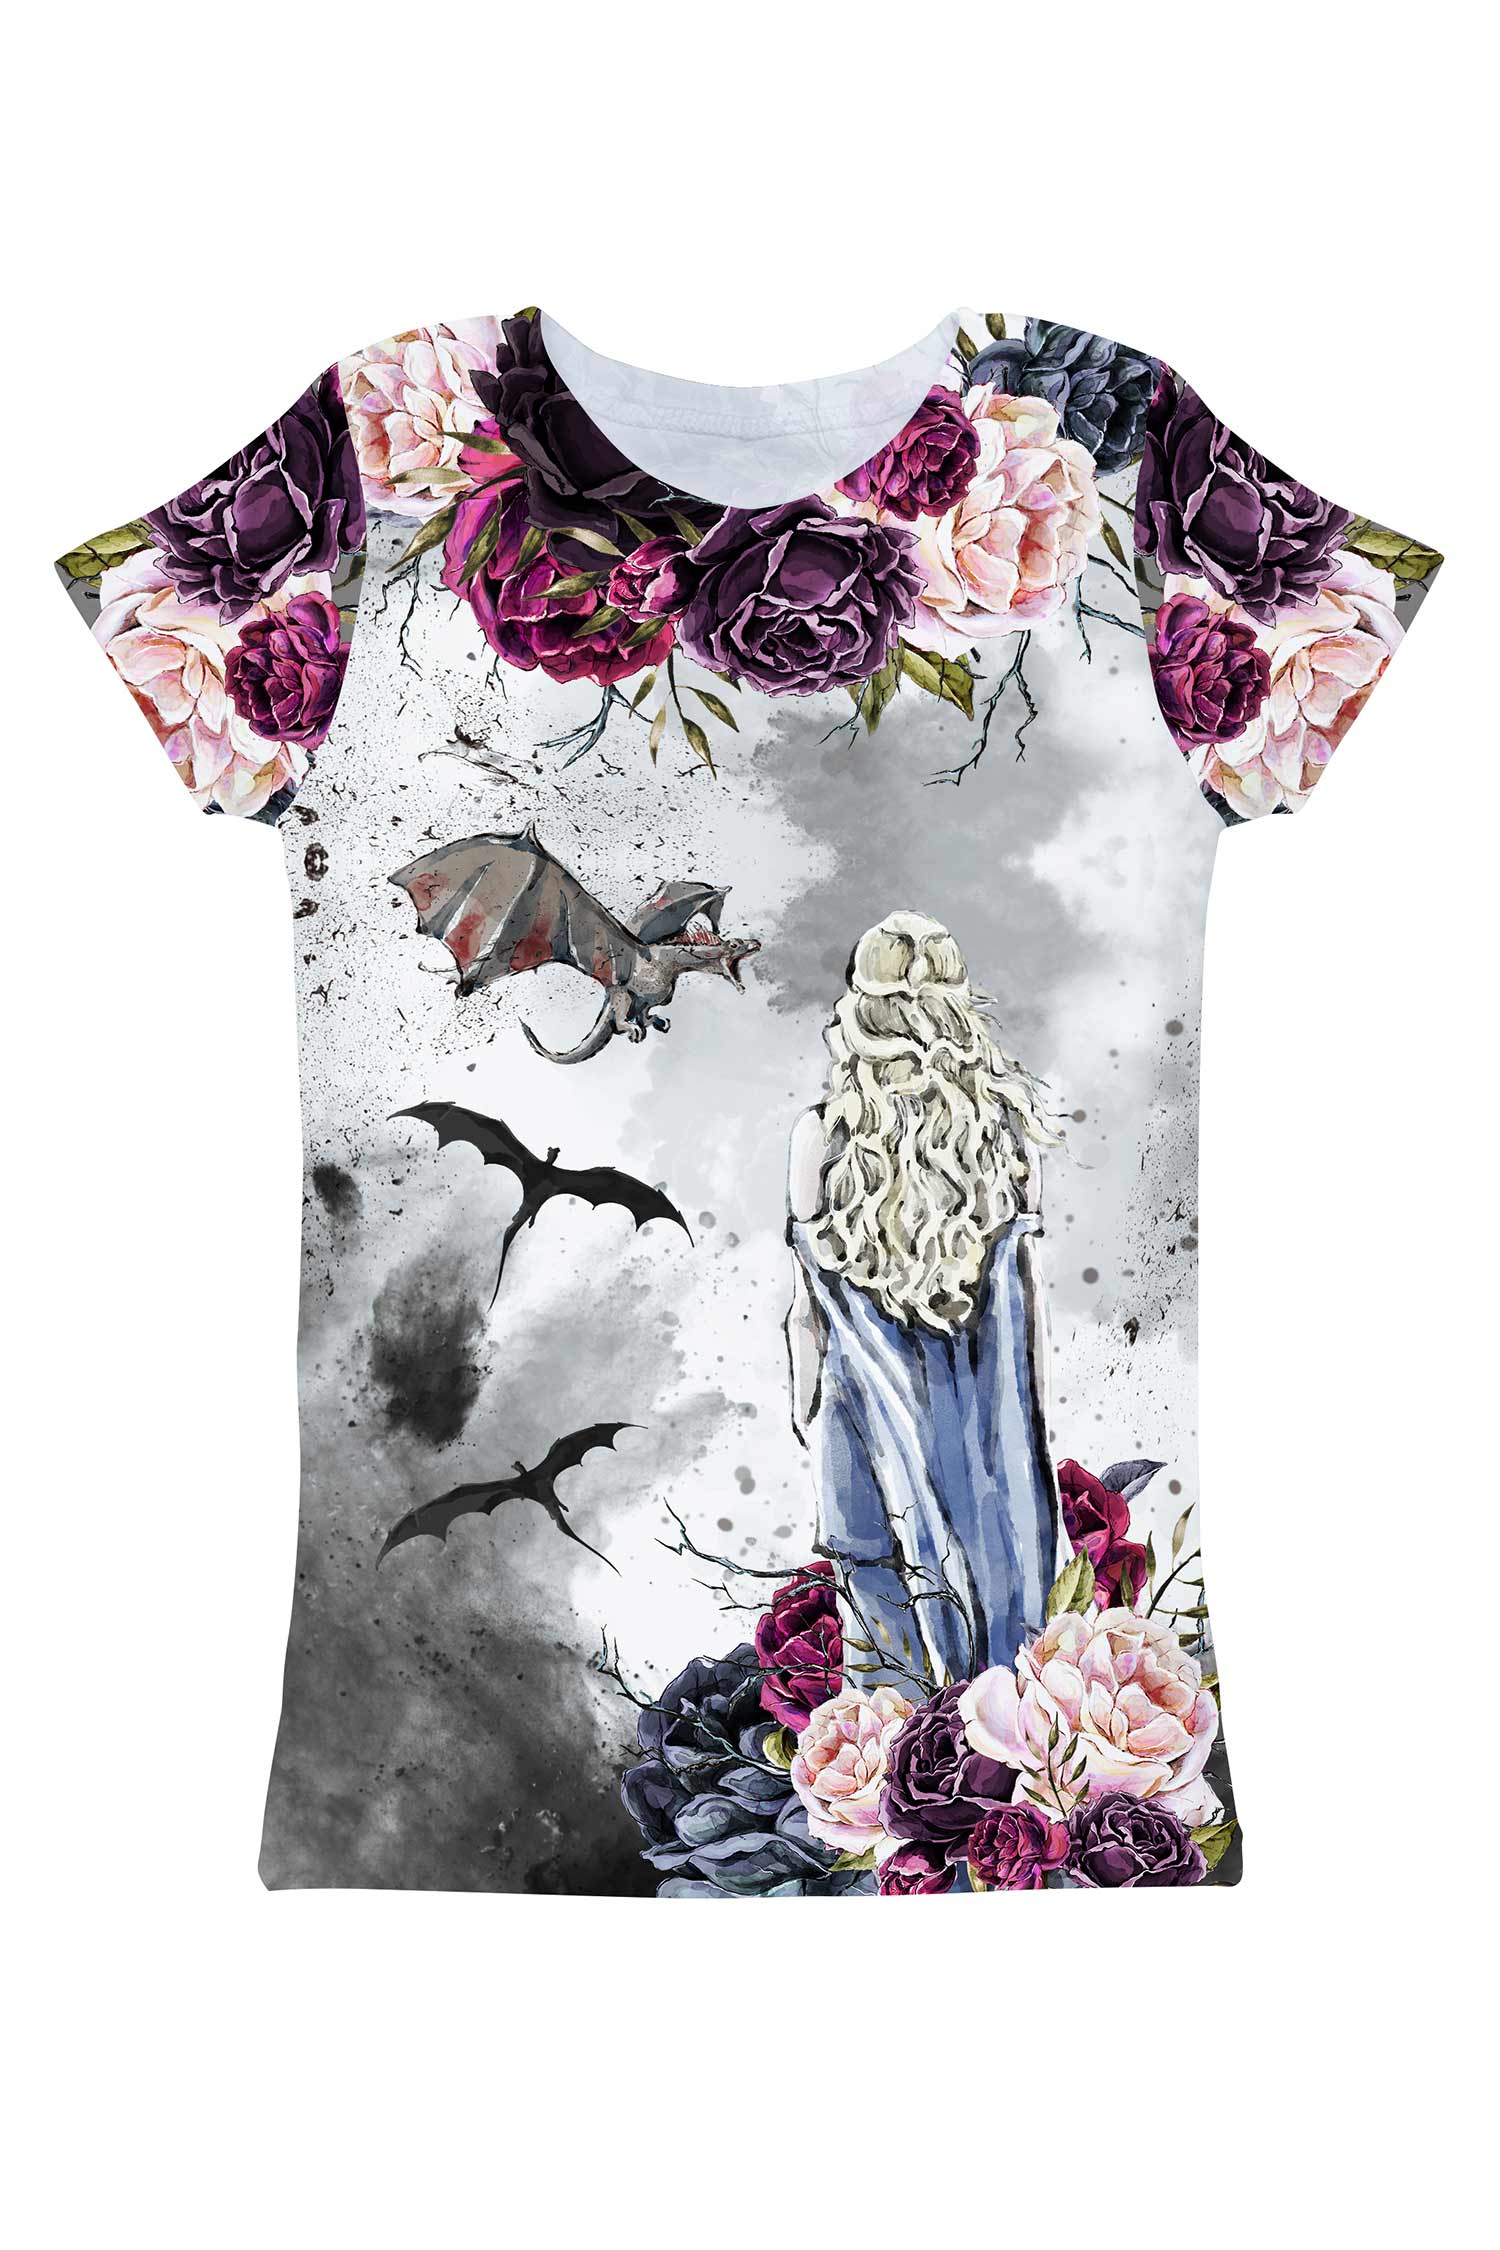 Duchess & Dragons Zoe Grey Printed Designer T-Shirt - Women - Pineapple Clothing